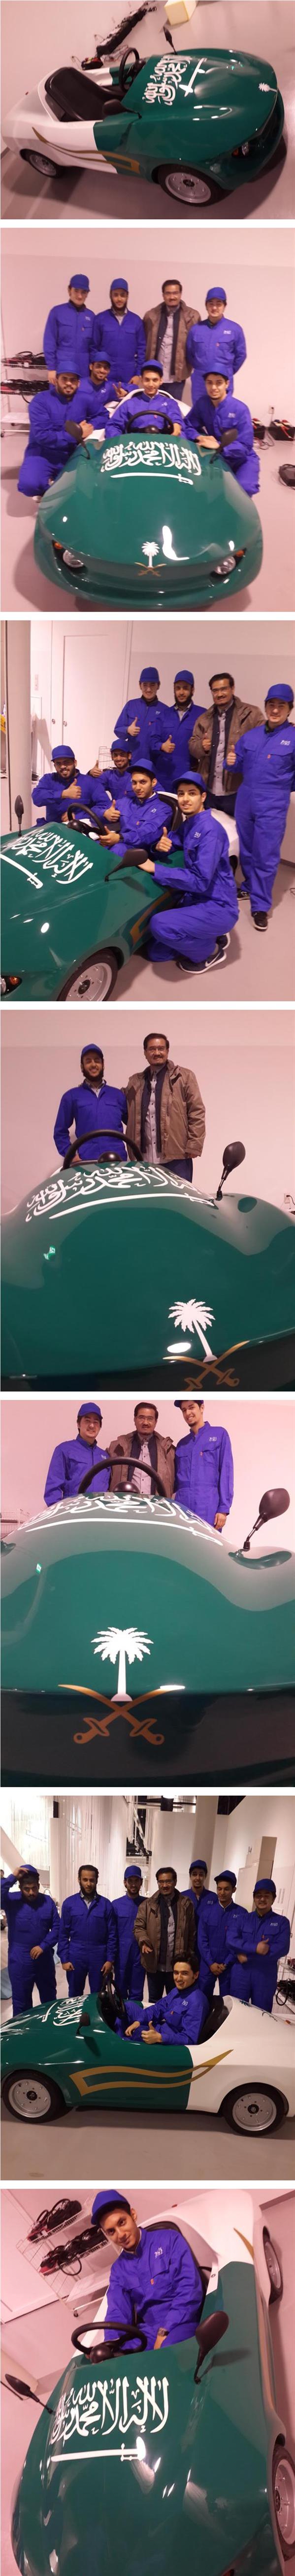 صور لشباب سعوديين أثناء عرضهم 261f13c7-7f95-4b7e-87c7-5f41be317644.jpg